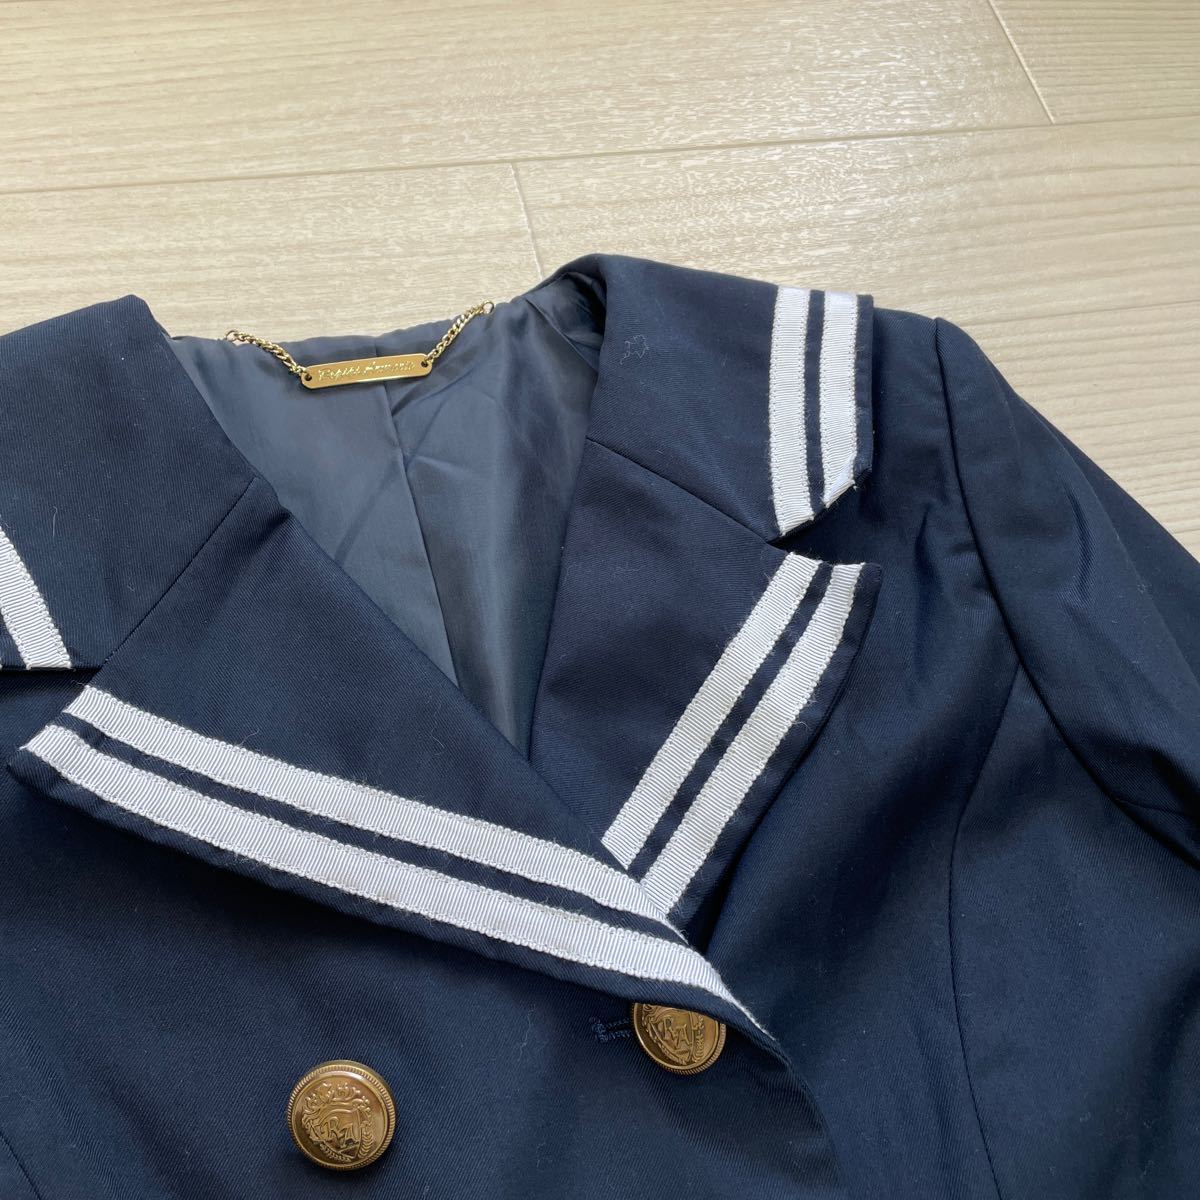 repipi armariorepi Piaa ru Mario formal suit graduation ceremony . clothes going to school girl sailor jacket skirt dark blue size S 150-160cm